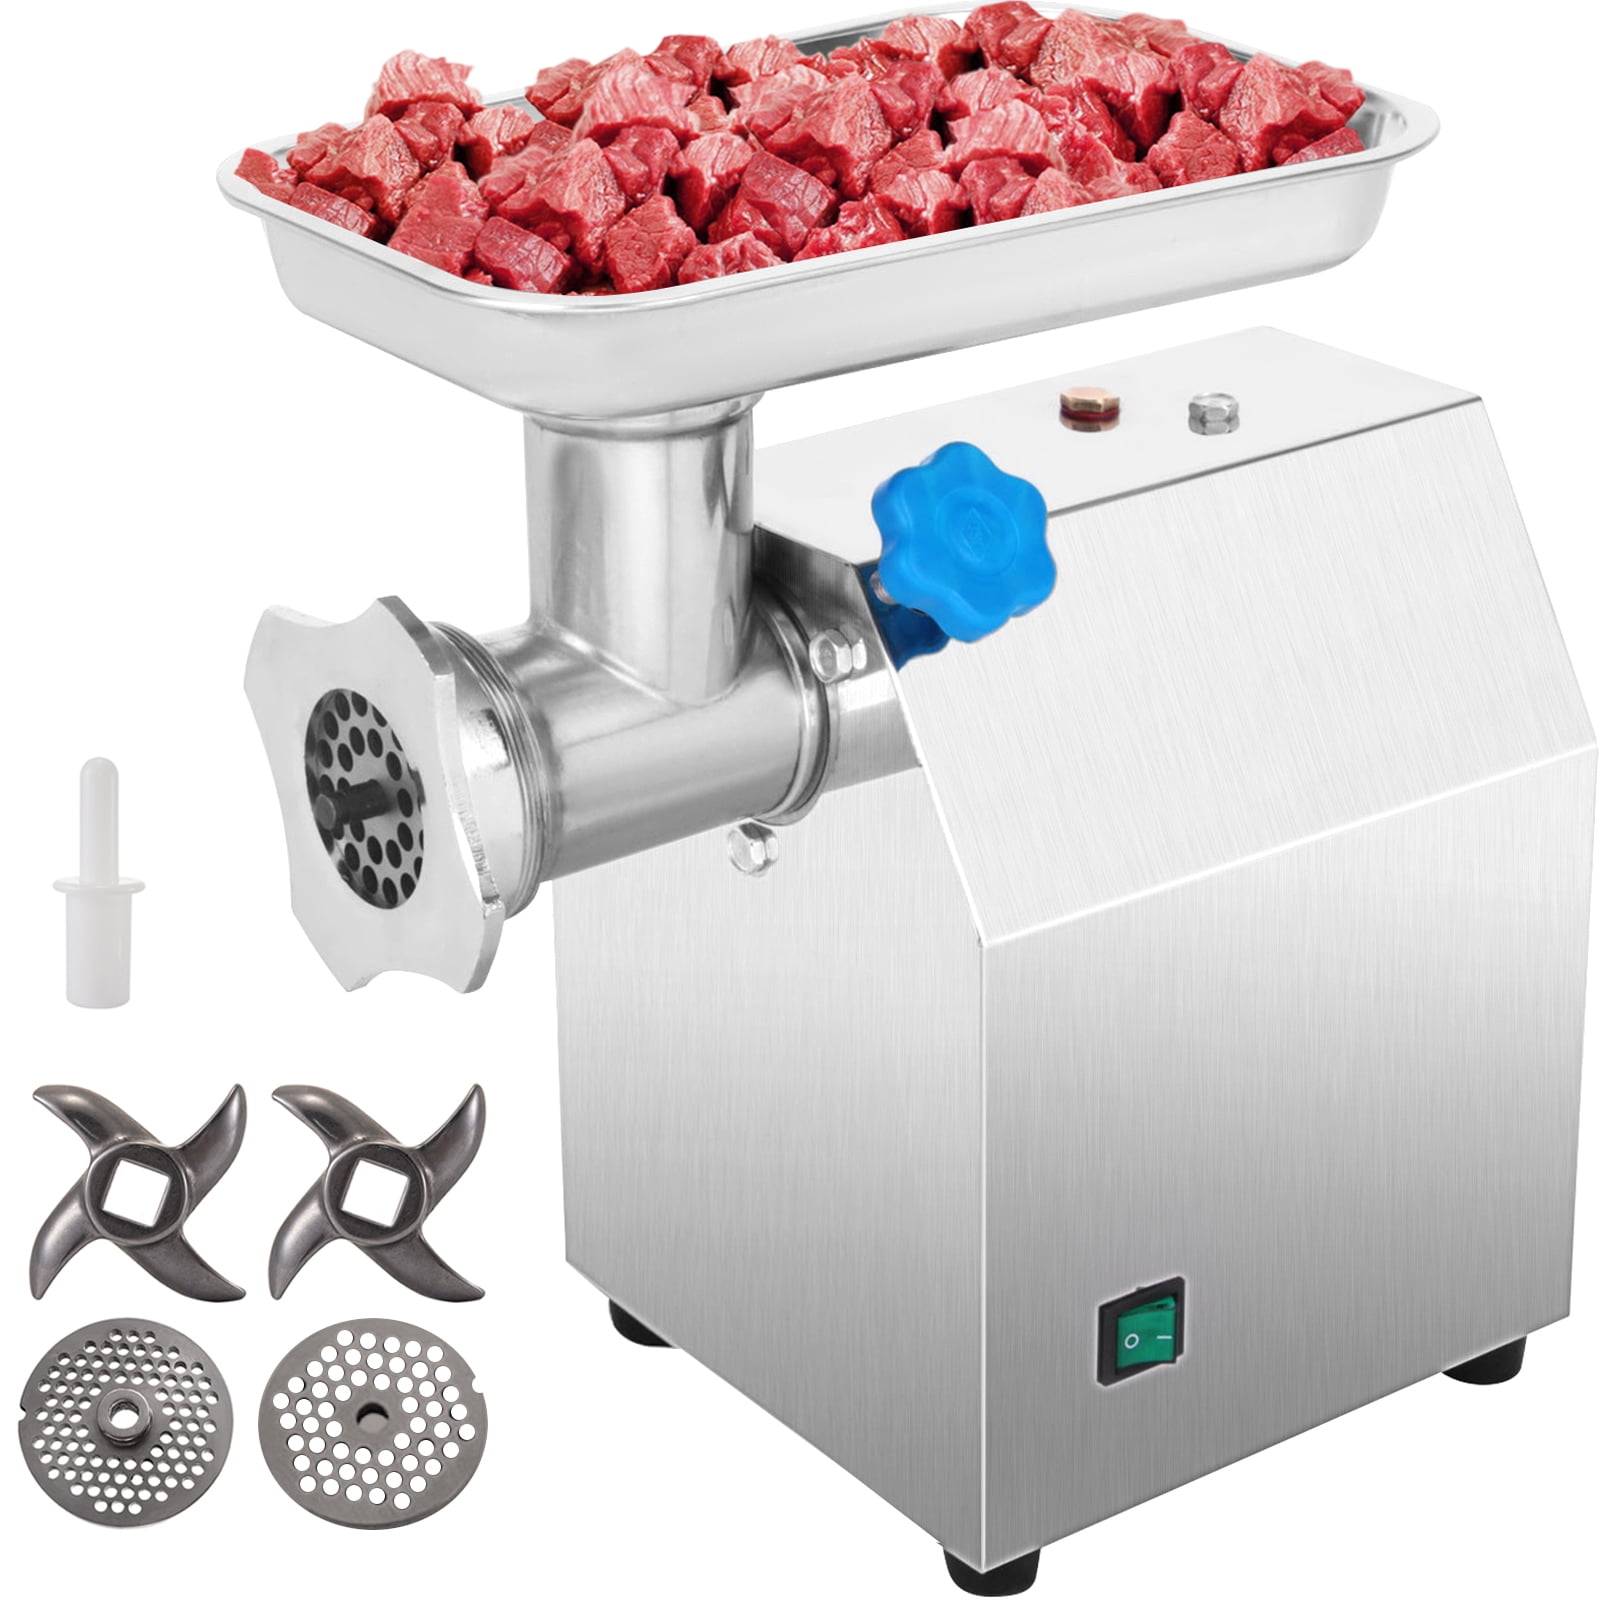 Details about   110V Commercial Electric Meat Grinder Mincer Vegs Sausage Filling Machine 850W 